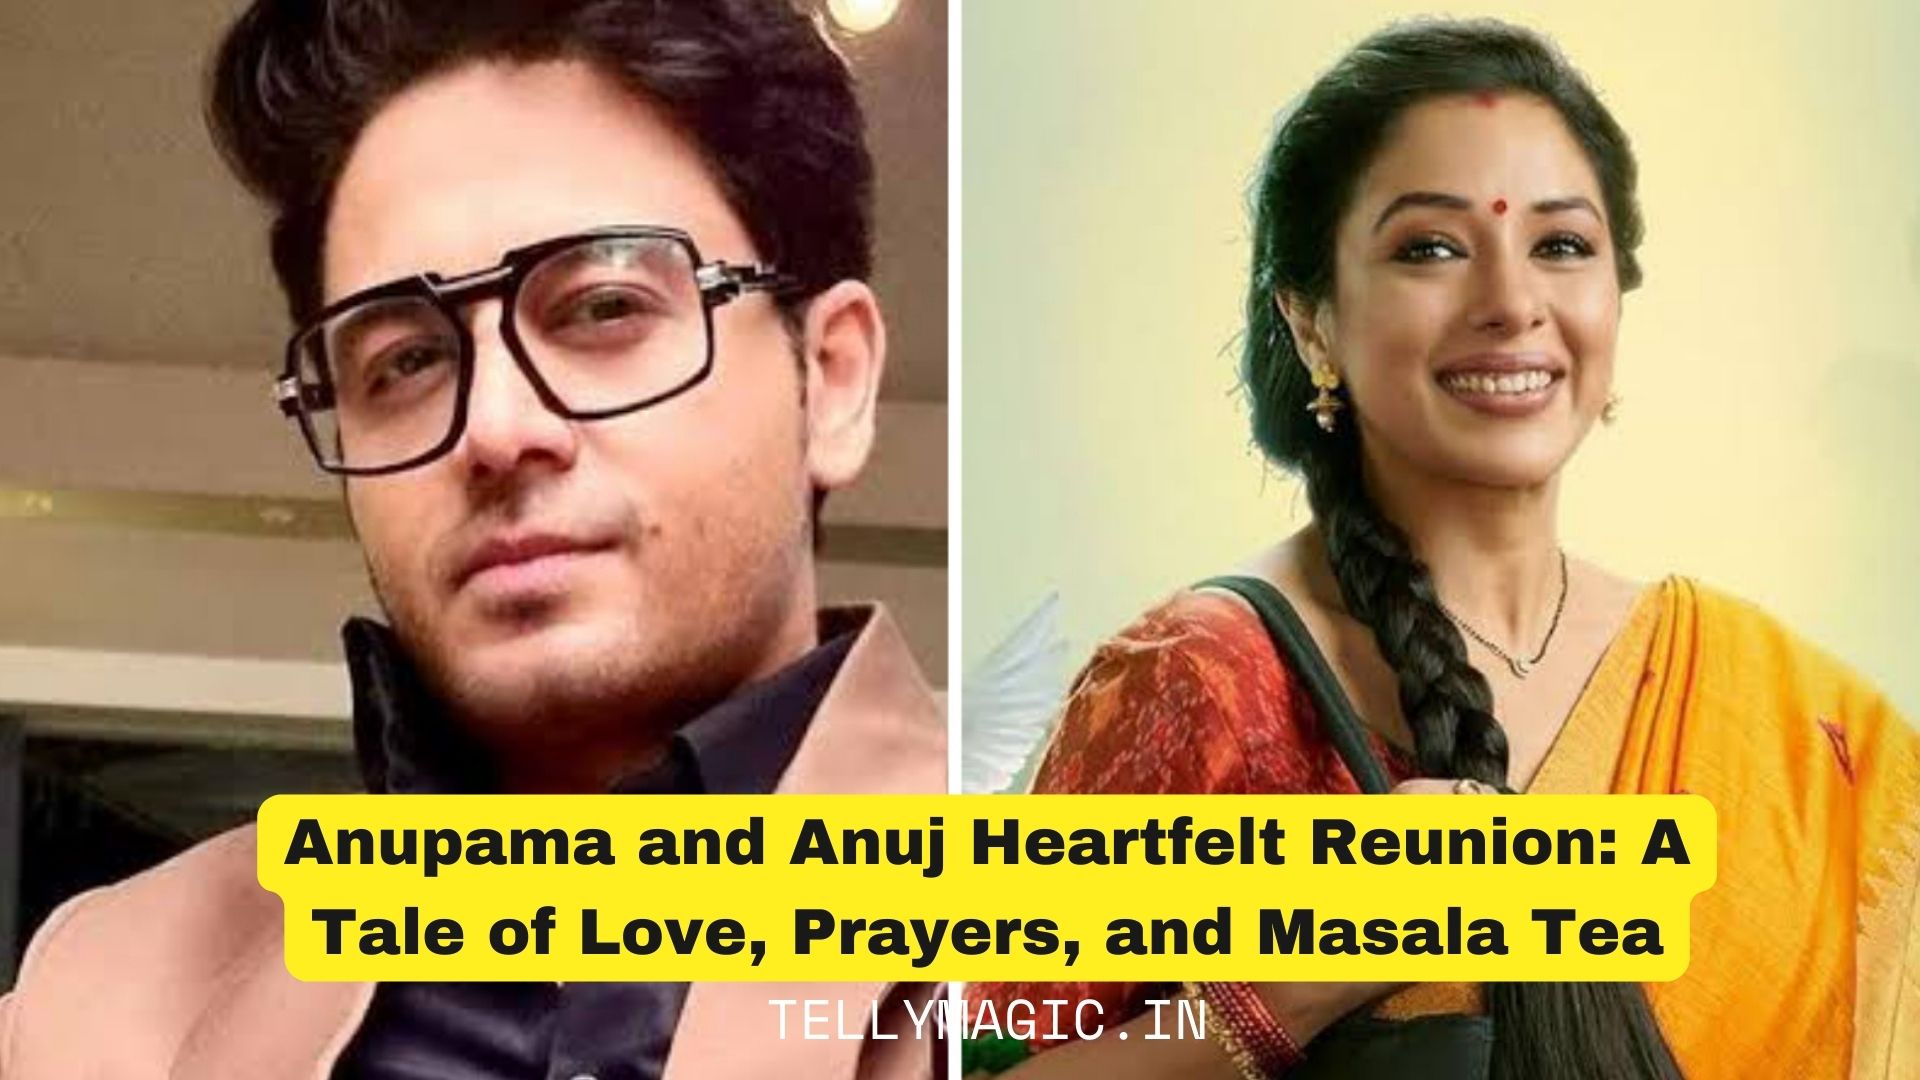 Anupama and Anuj Heartfelt Reunion: A Tale of Love, Prayers, and Masala Tea